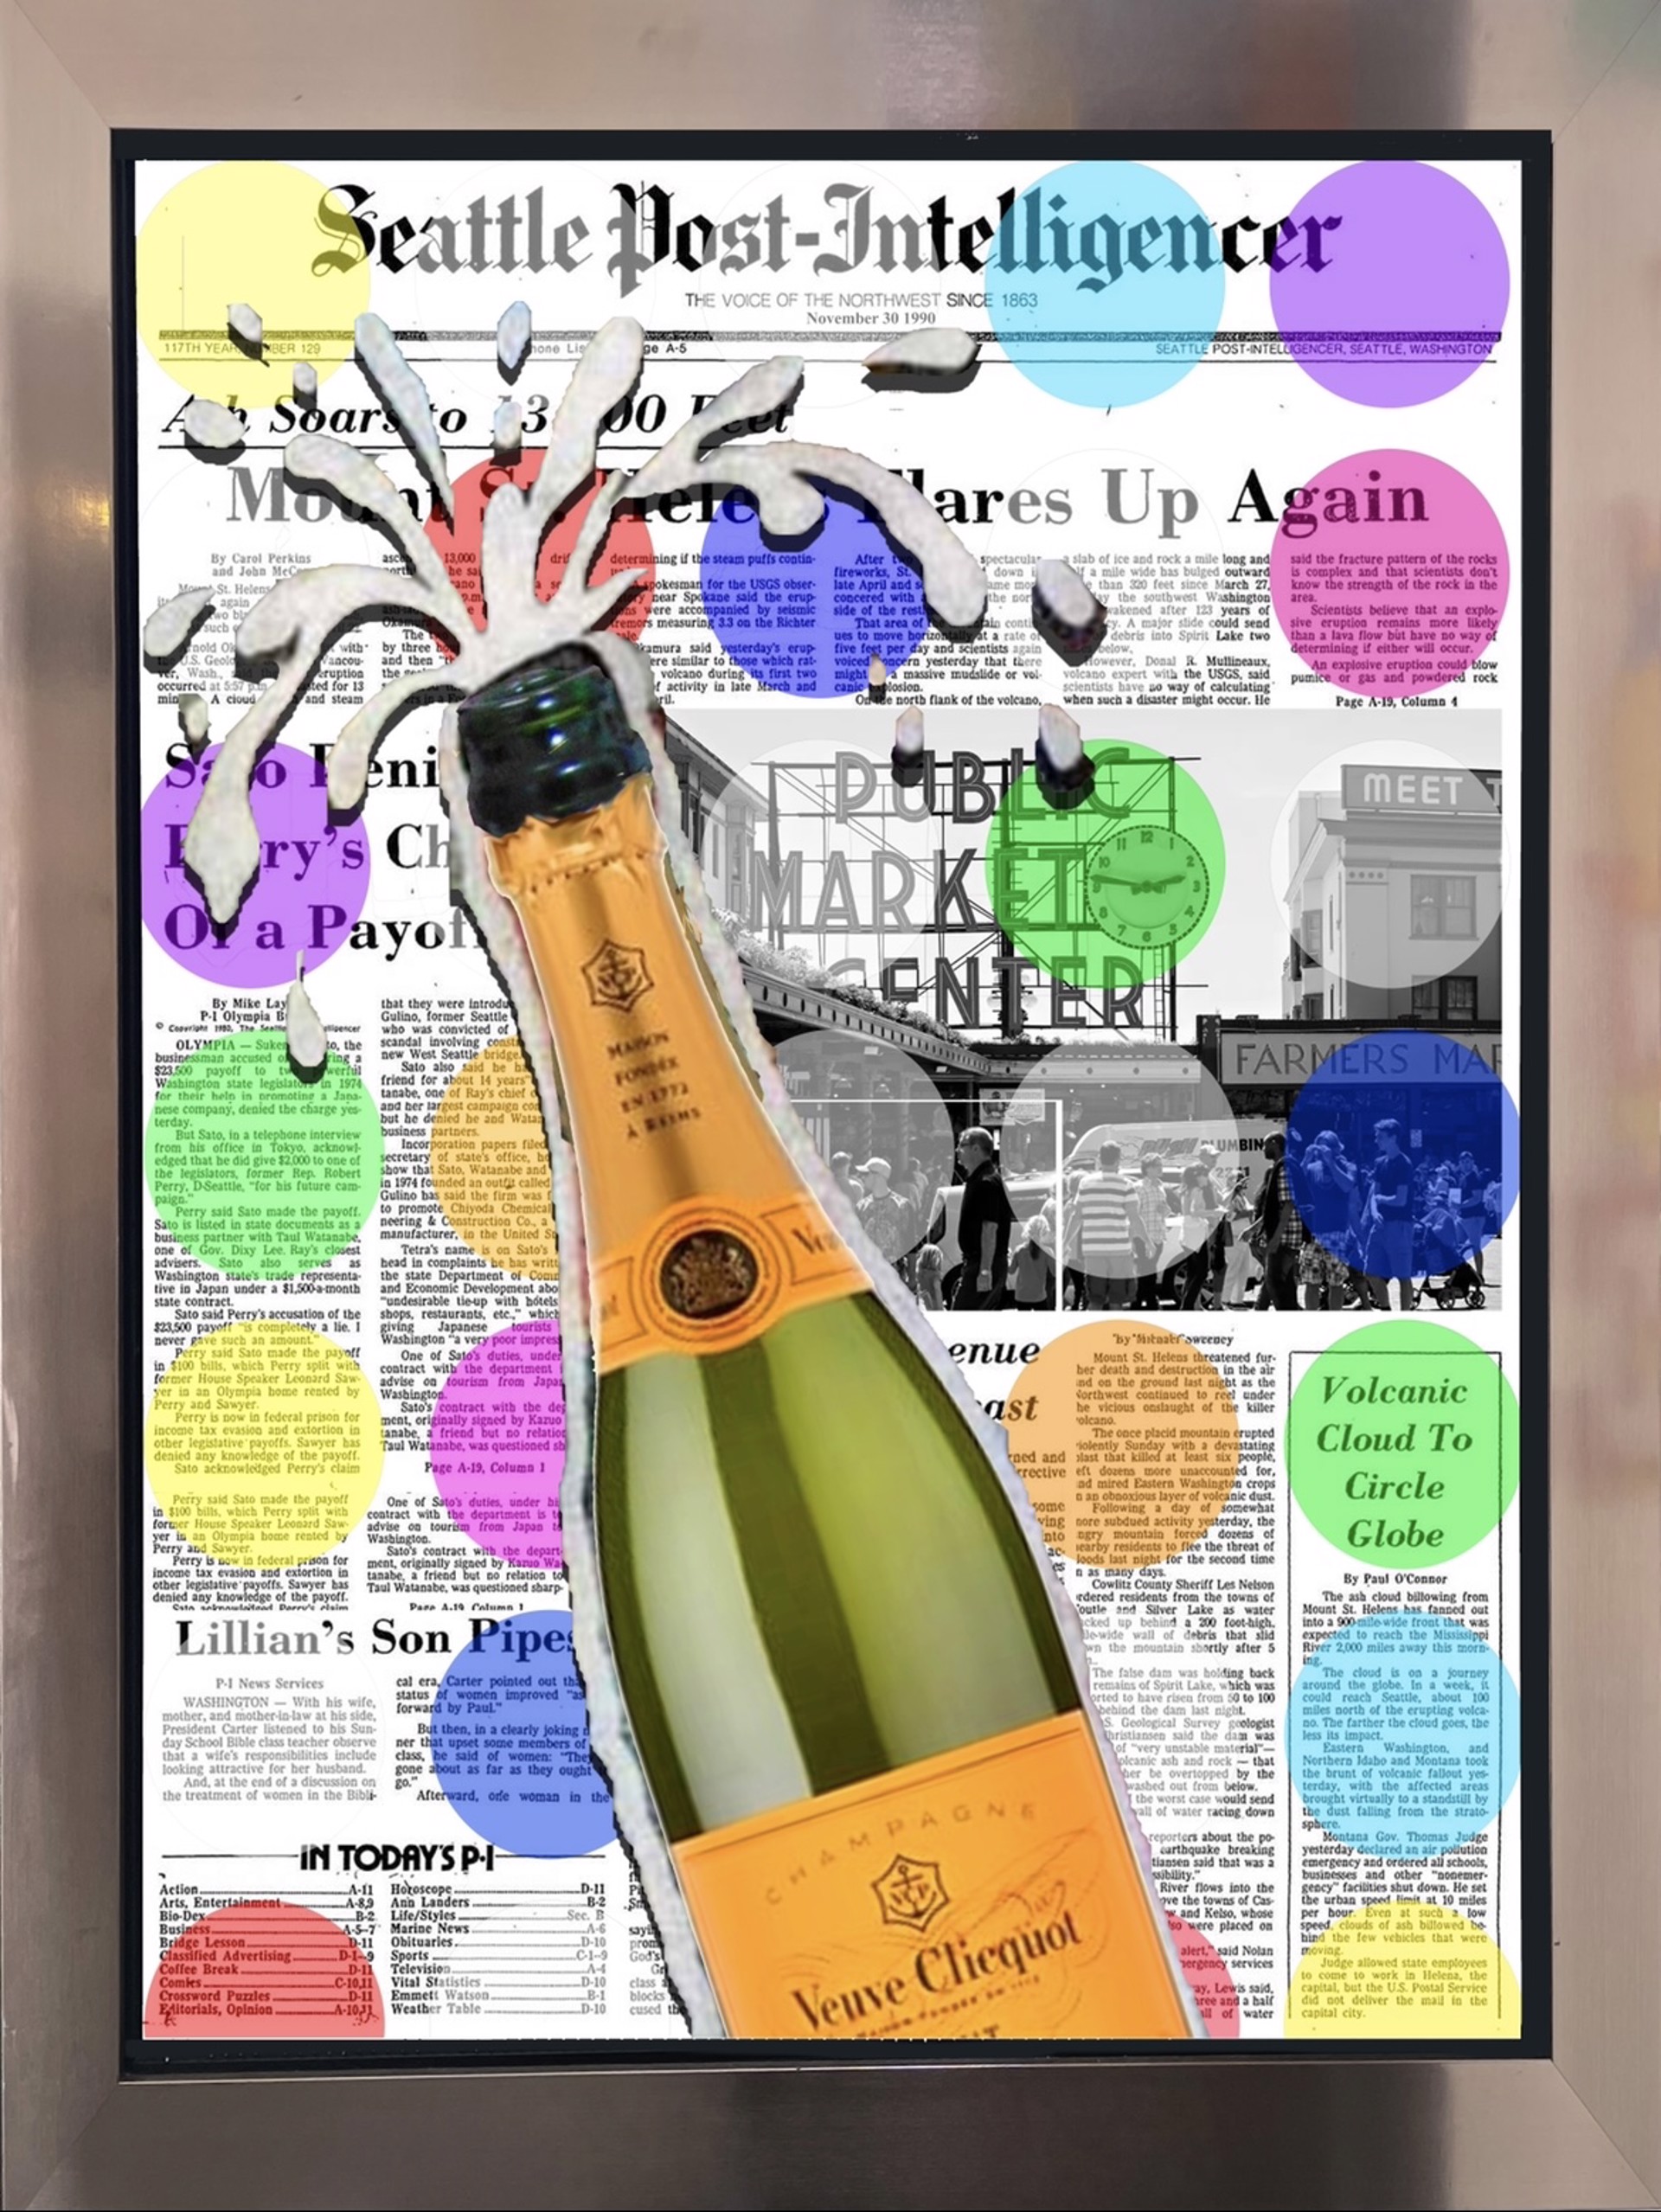 "Champagne Veuve Clicquot" by WSJ Series on Newspaper by Elena Bulatova